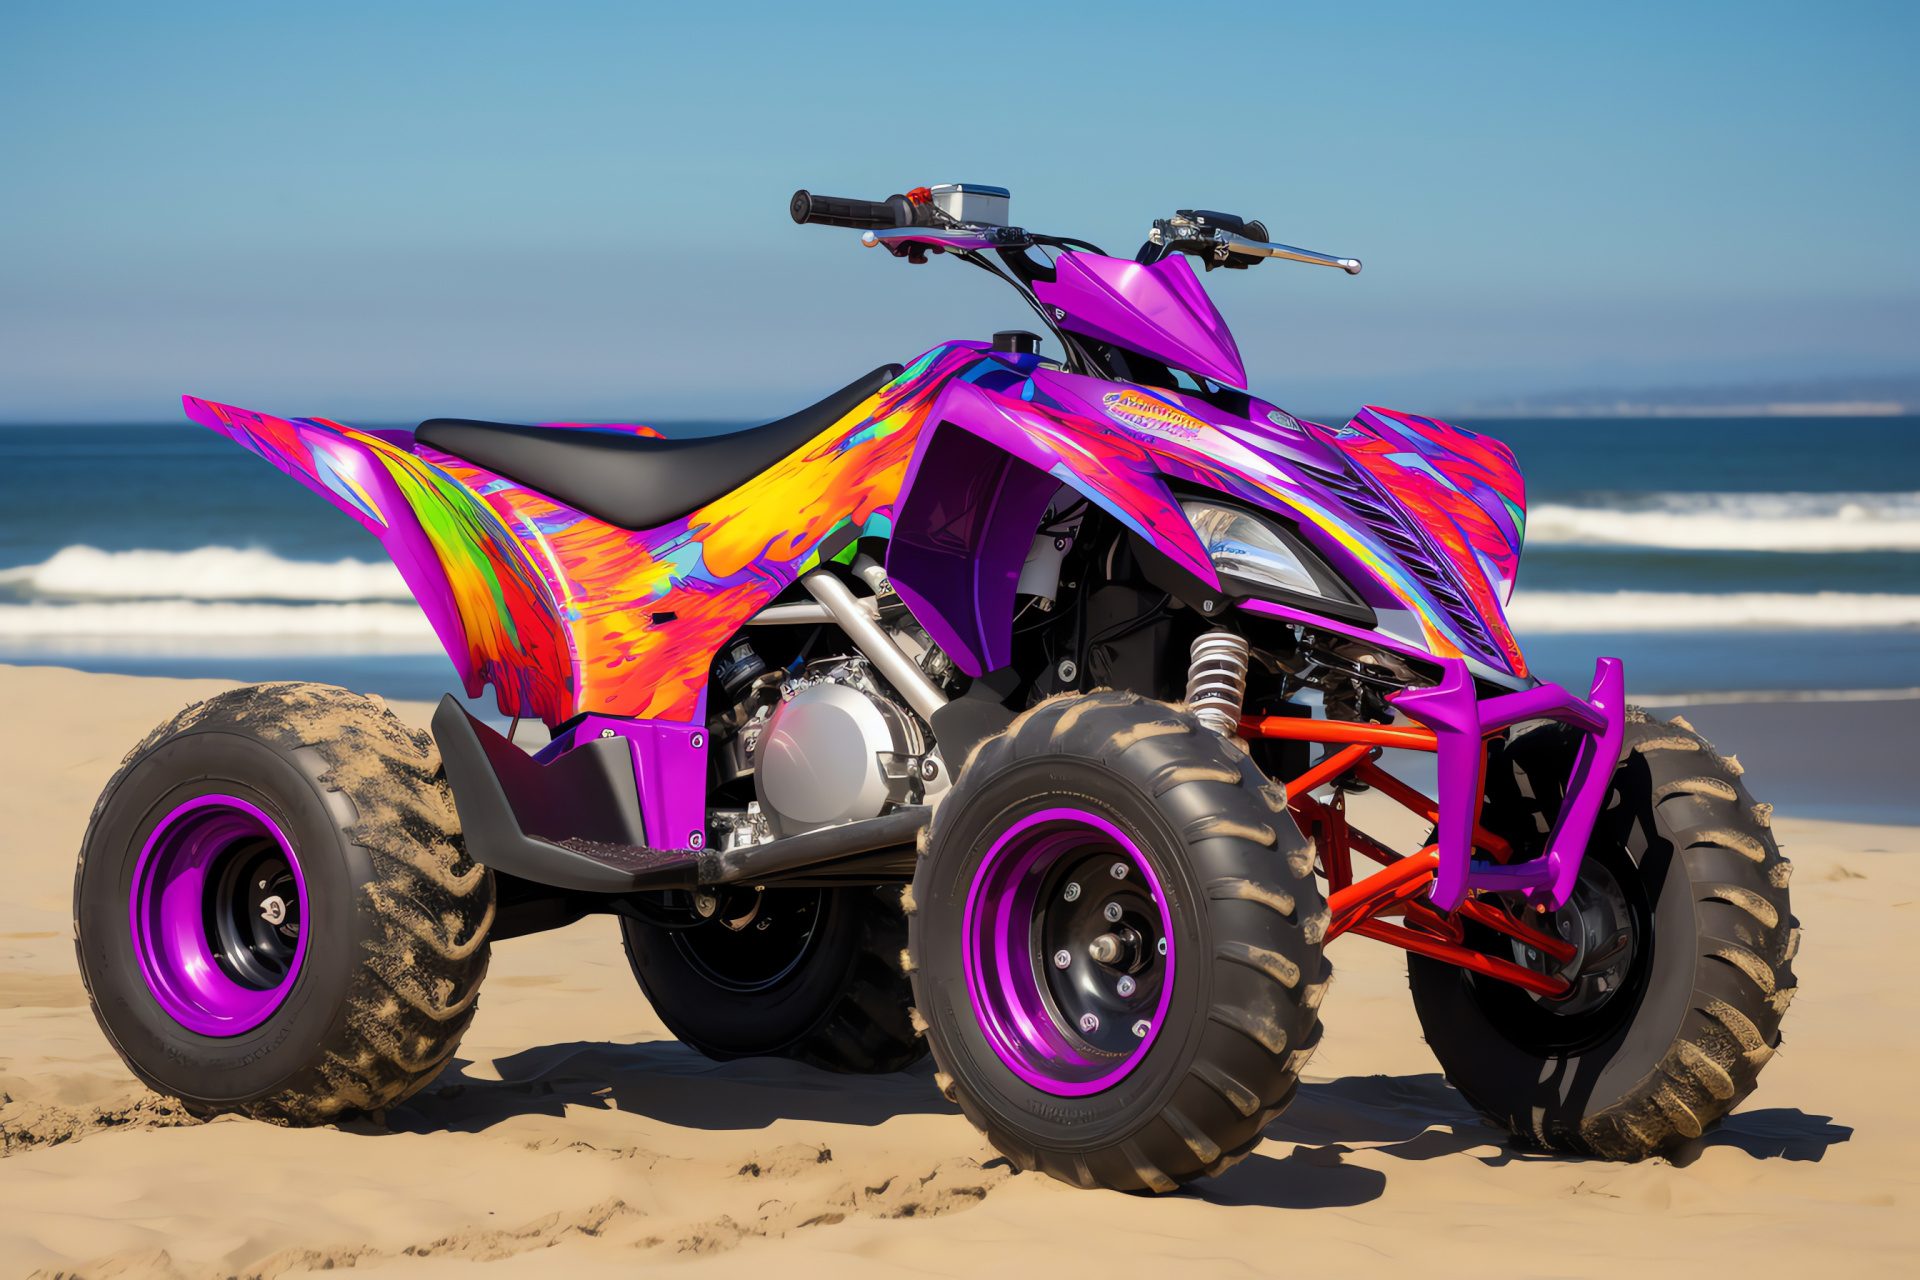 Raptor 700SE ATV, Pismo Beach dunes, Coastal adventure, Neon graphic kit, Oceanic backdrop, HD Desktop Image